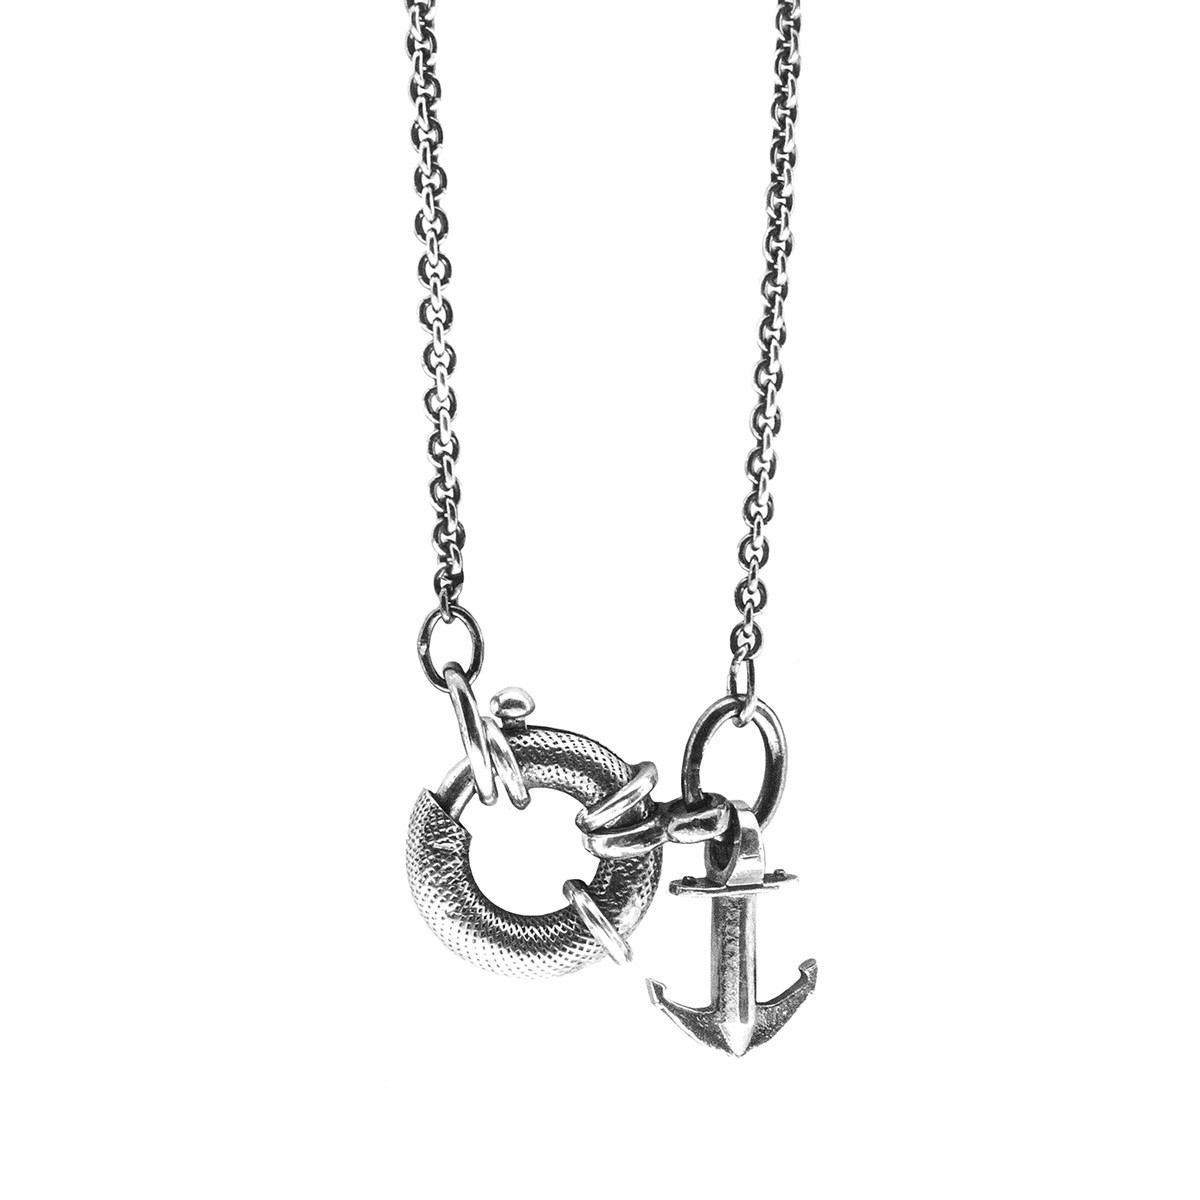 Anchor & Crew Clyde Signature Silver Necklace Pendant